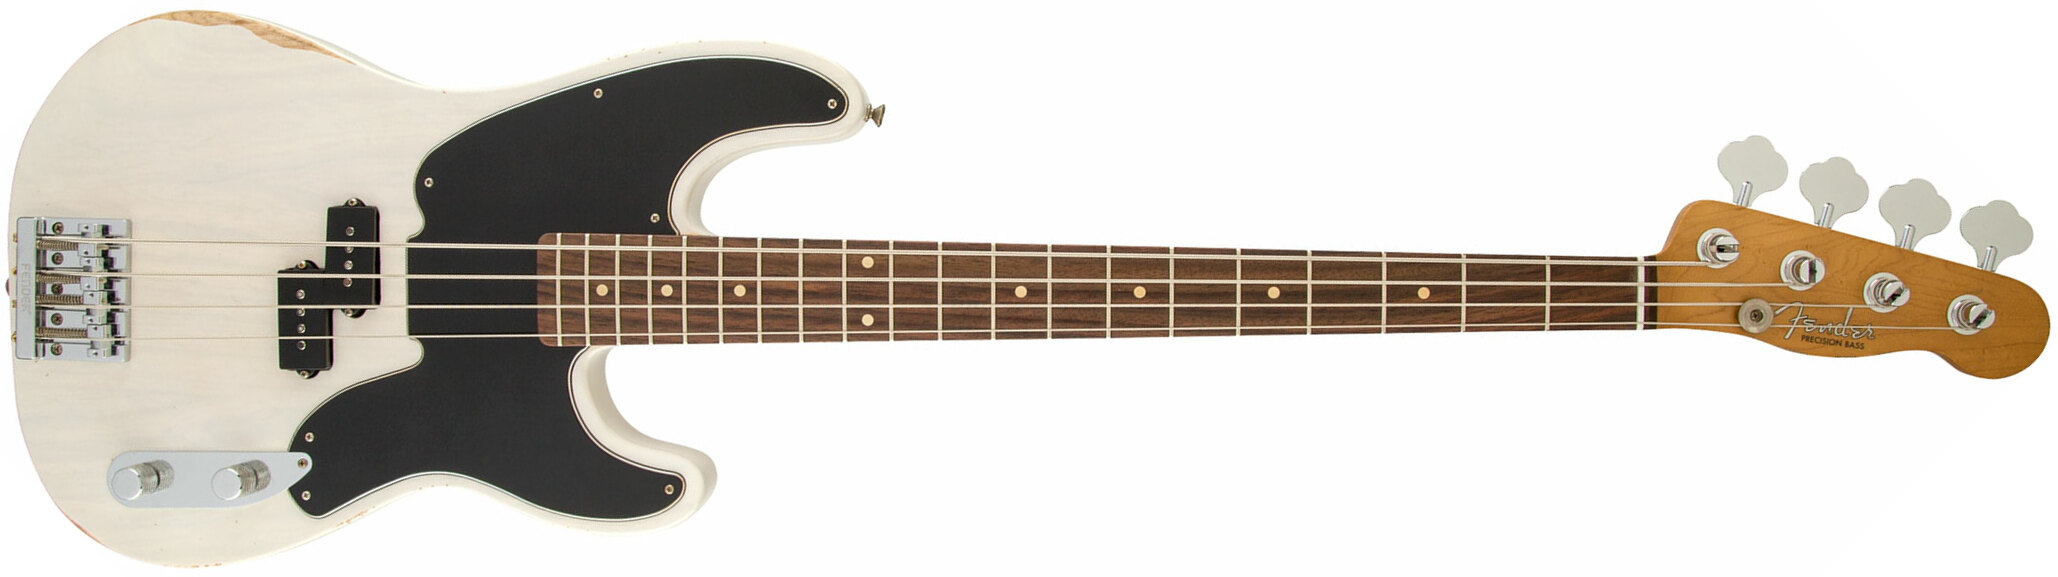 Fender Mike Dirnt Precision Bass Mex Signature Rw - White Blonde - Bajo eléctrico de cuerpo sólido - Main picture